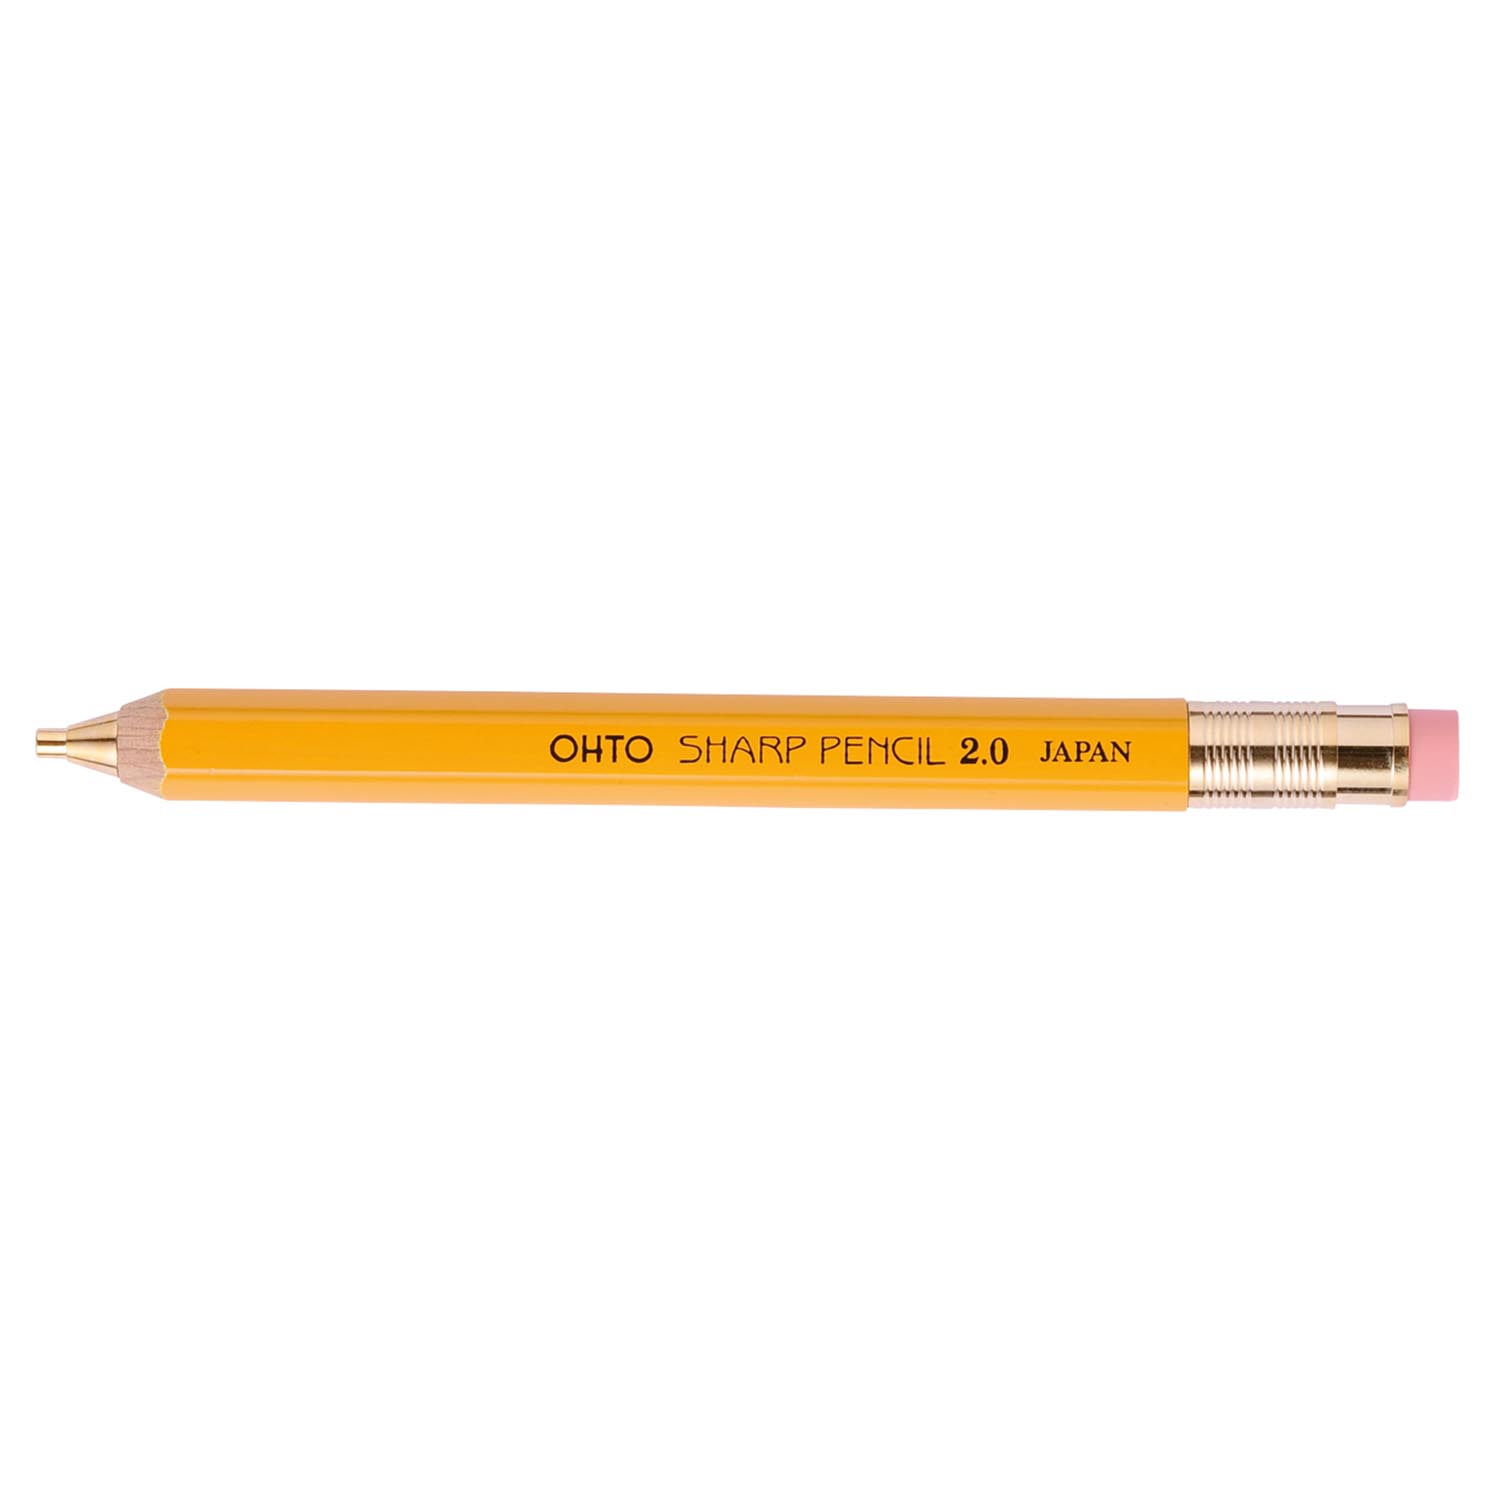 Sharp Pencil 2.0 OHTO APS-680E-YL (Yellow)